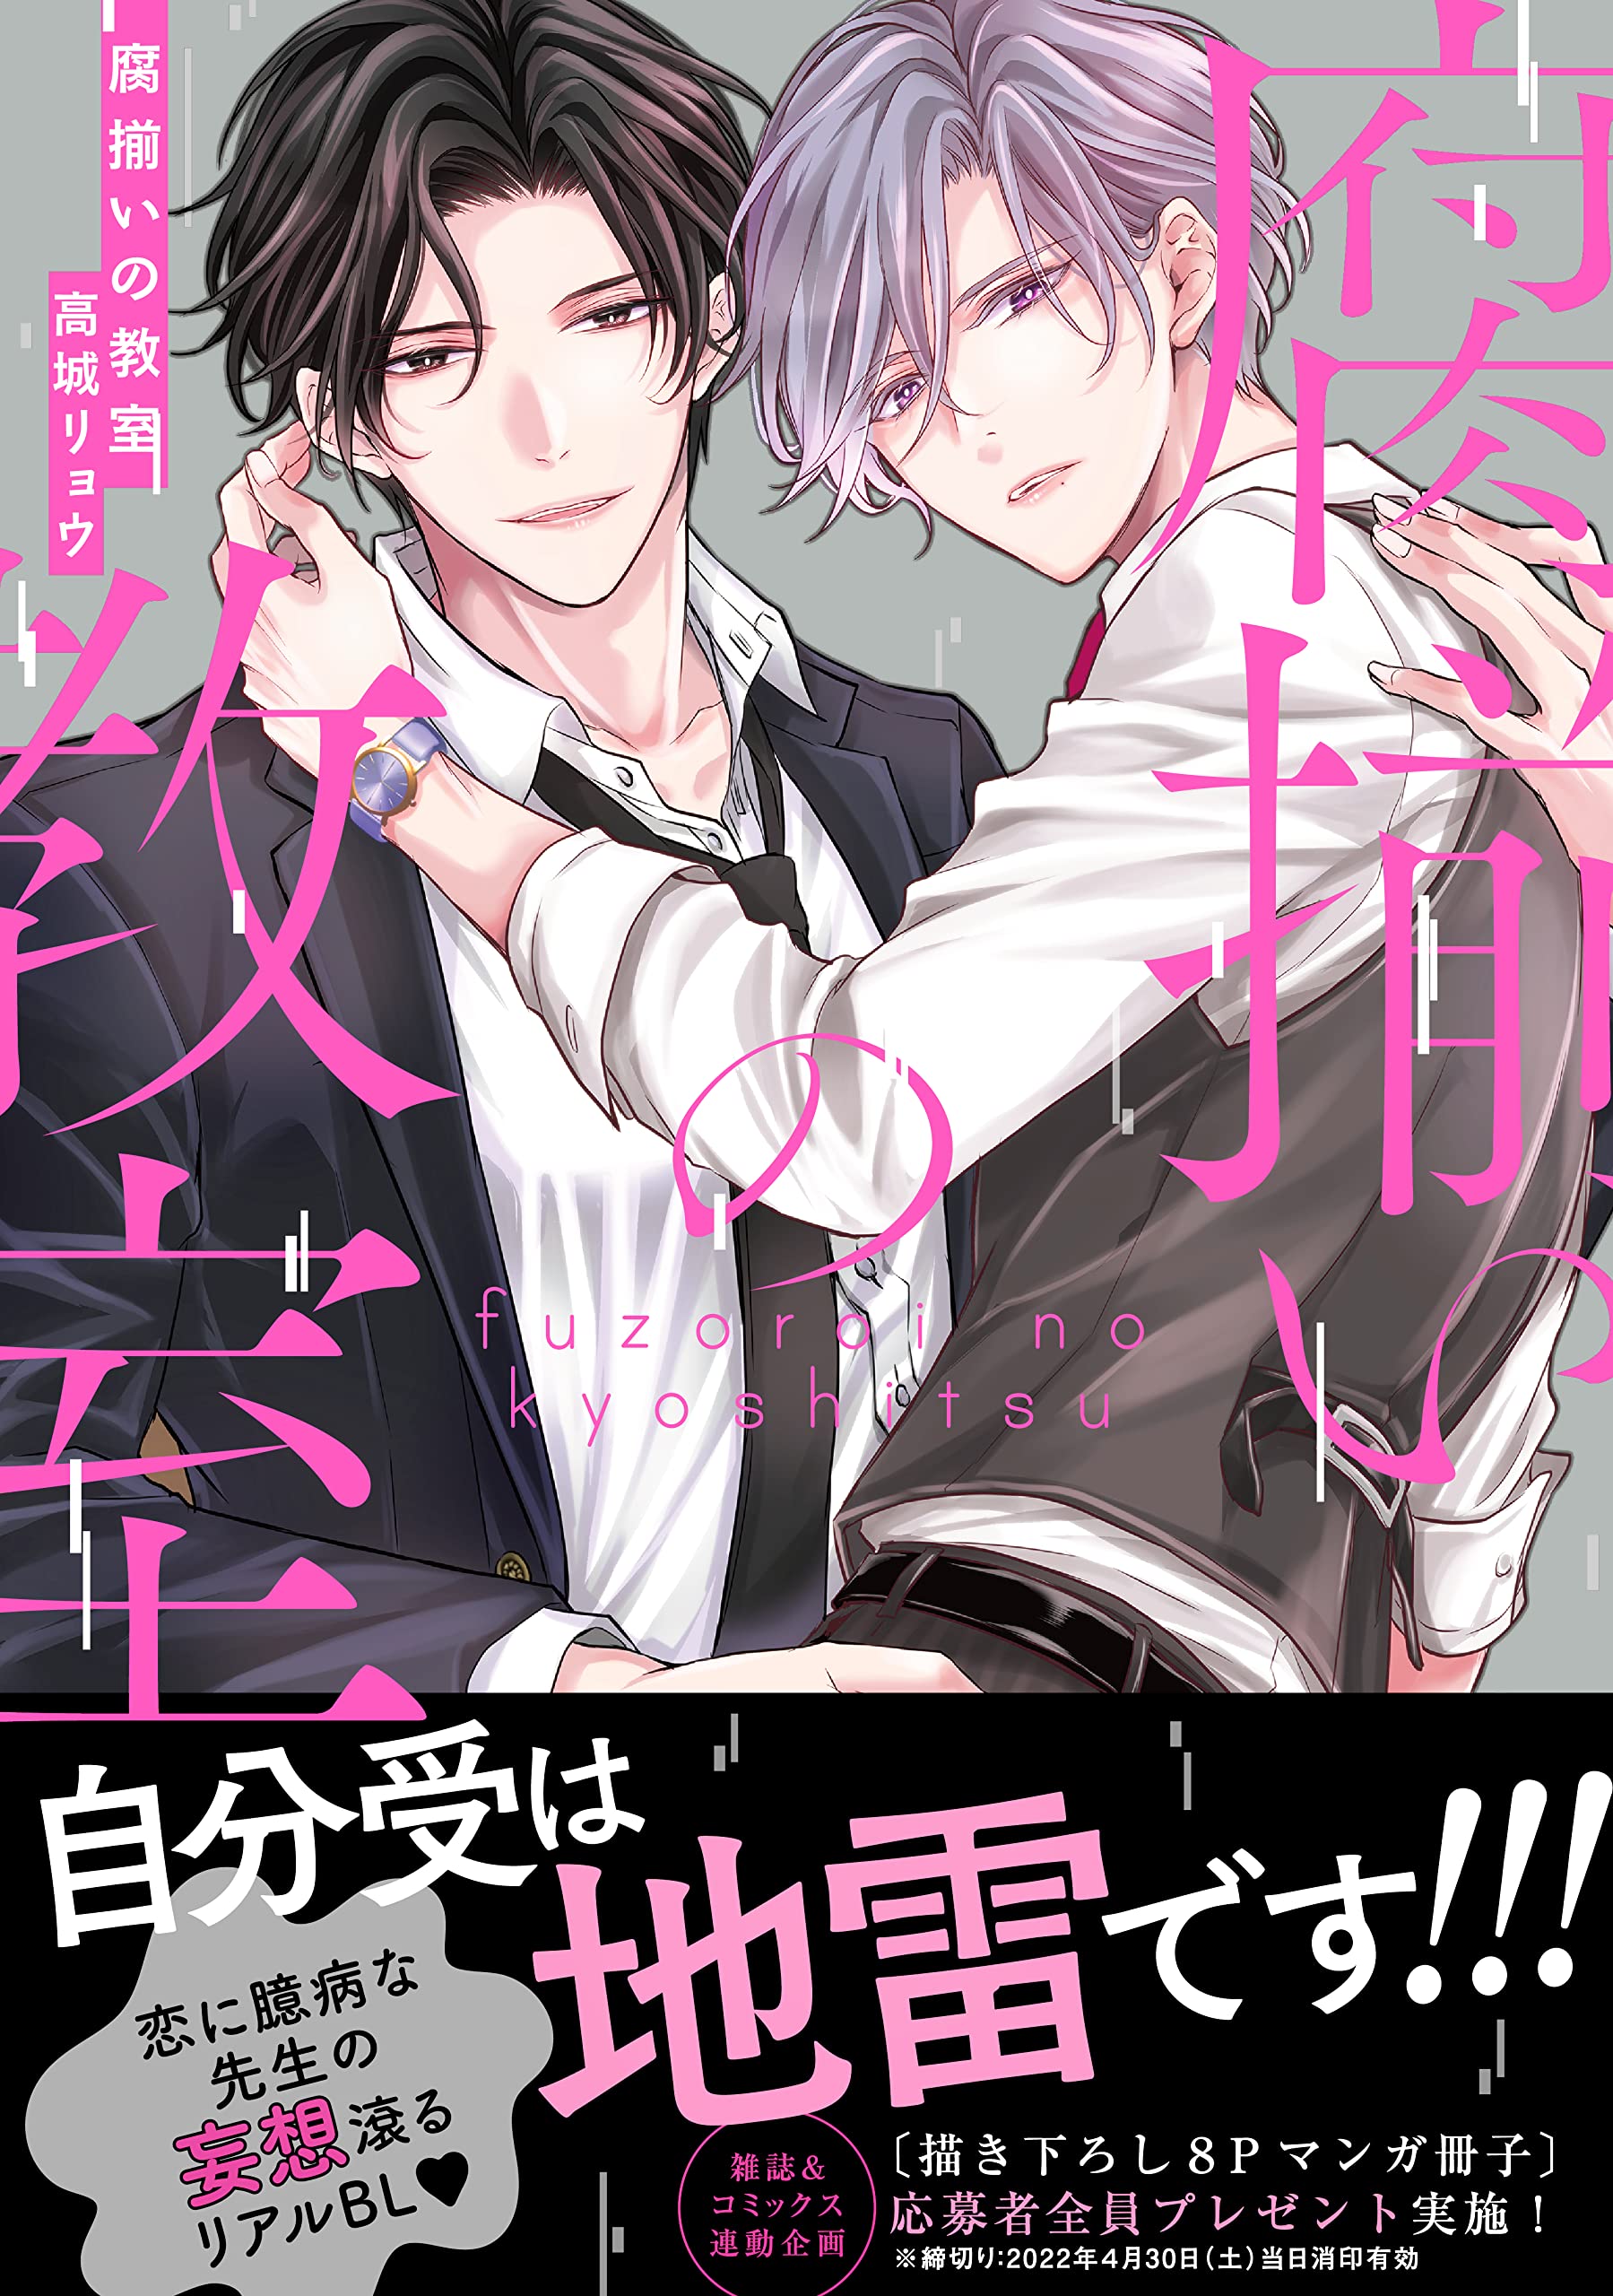 Boys Love (Yaoi) Comics - Fuzoroi no Kyoushitsu (腐揃いの教室 (drap COMICS DX)) / Takagi Ryo